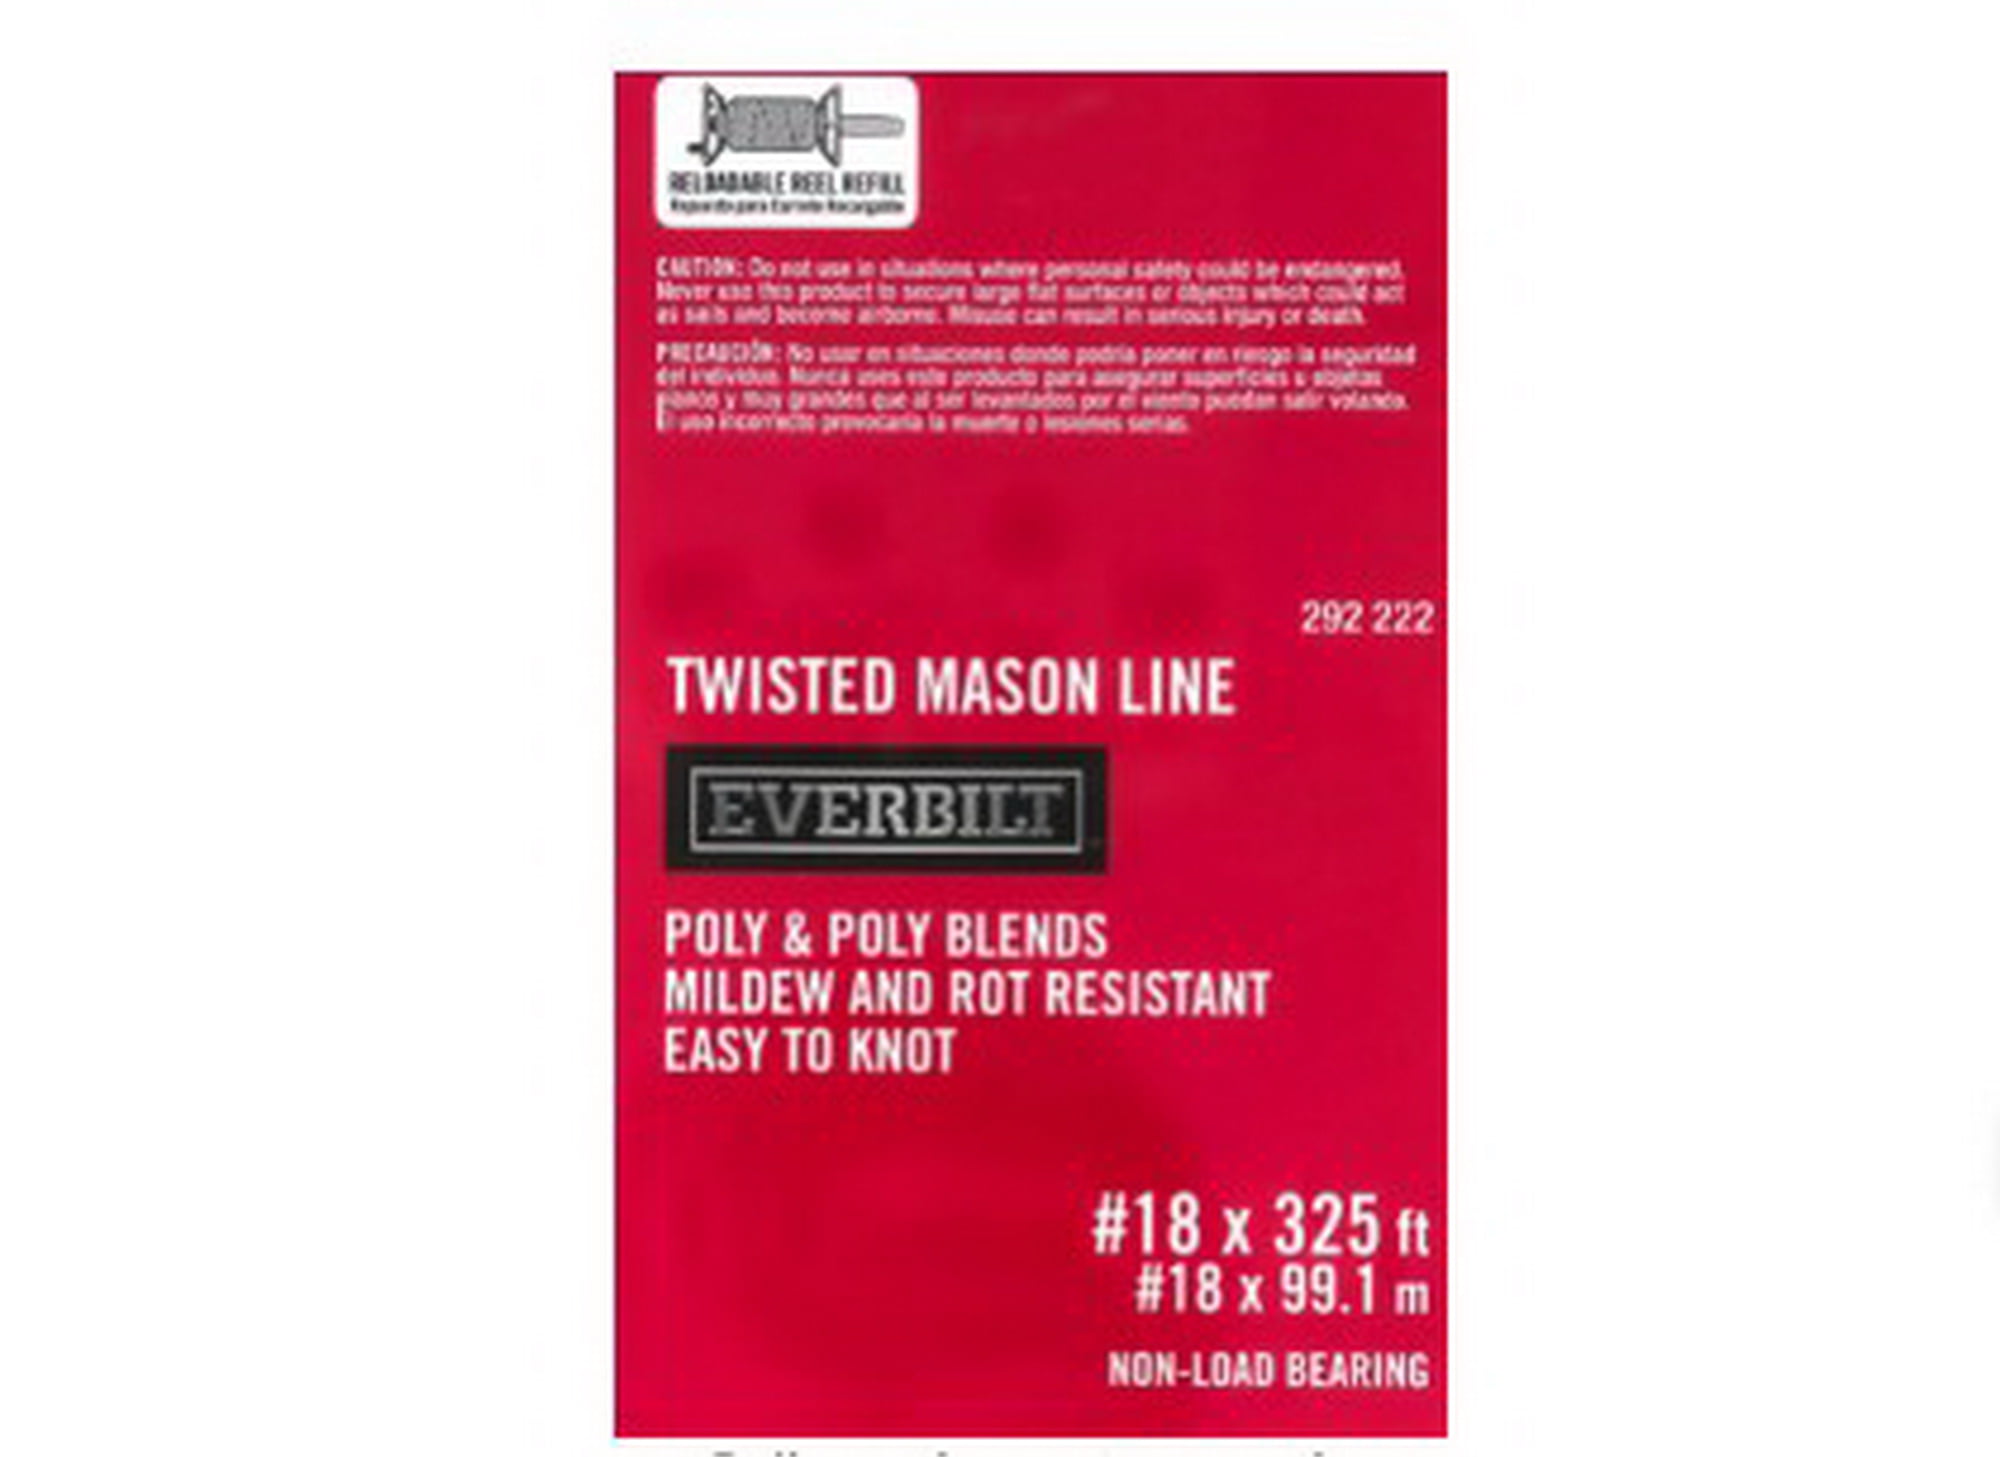 Everbilt Twisted Mason Line  #18 X 325' Poly & Poly Blends 2 ROLLS 